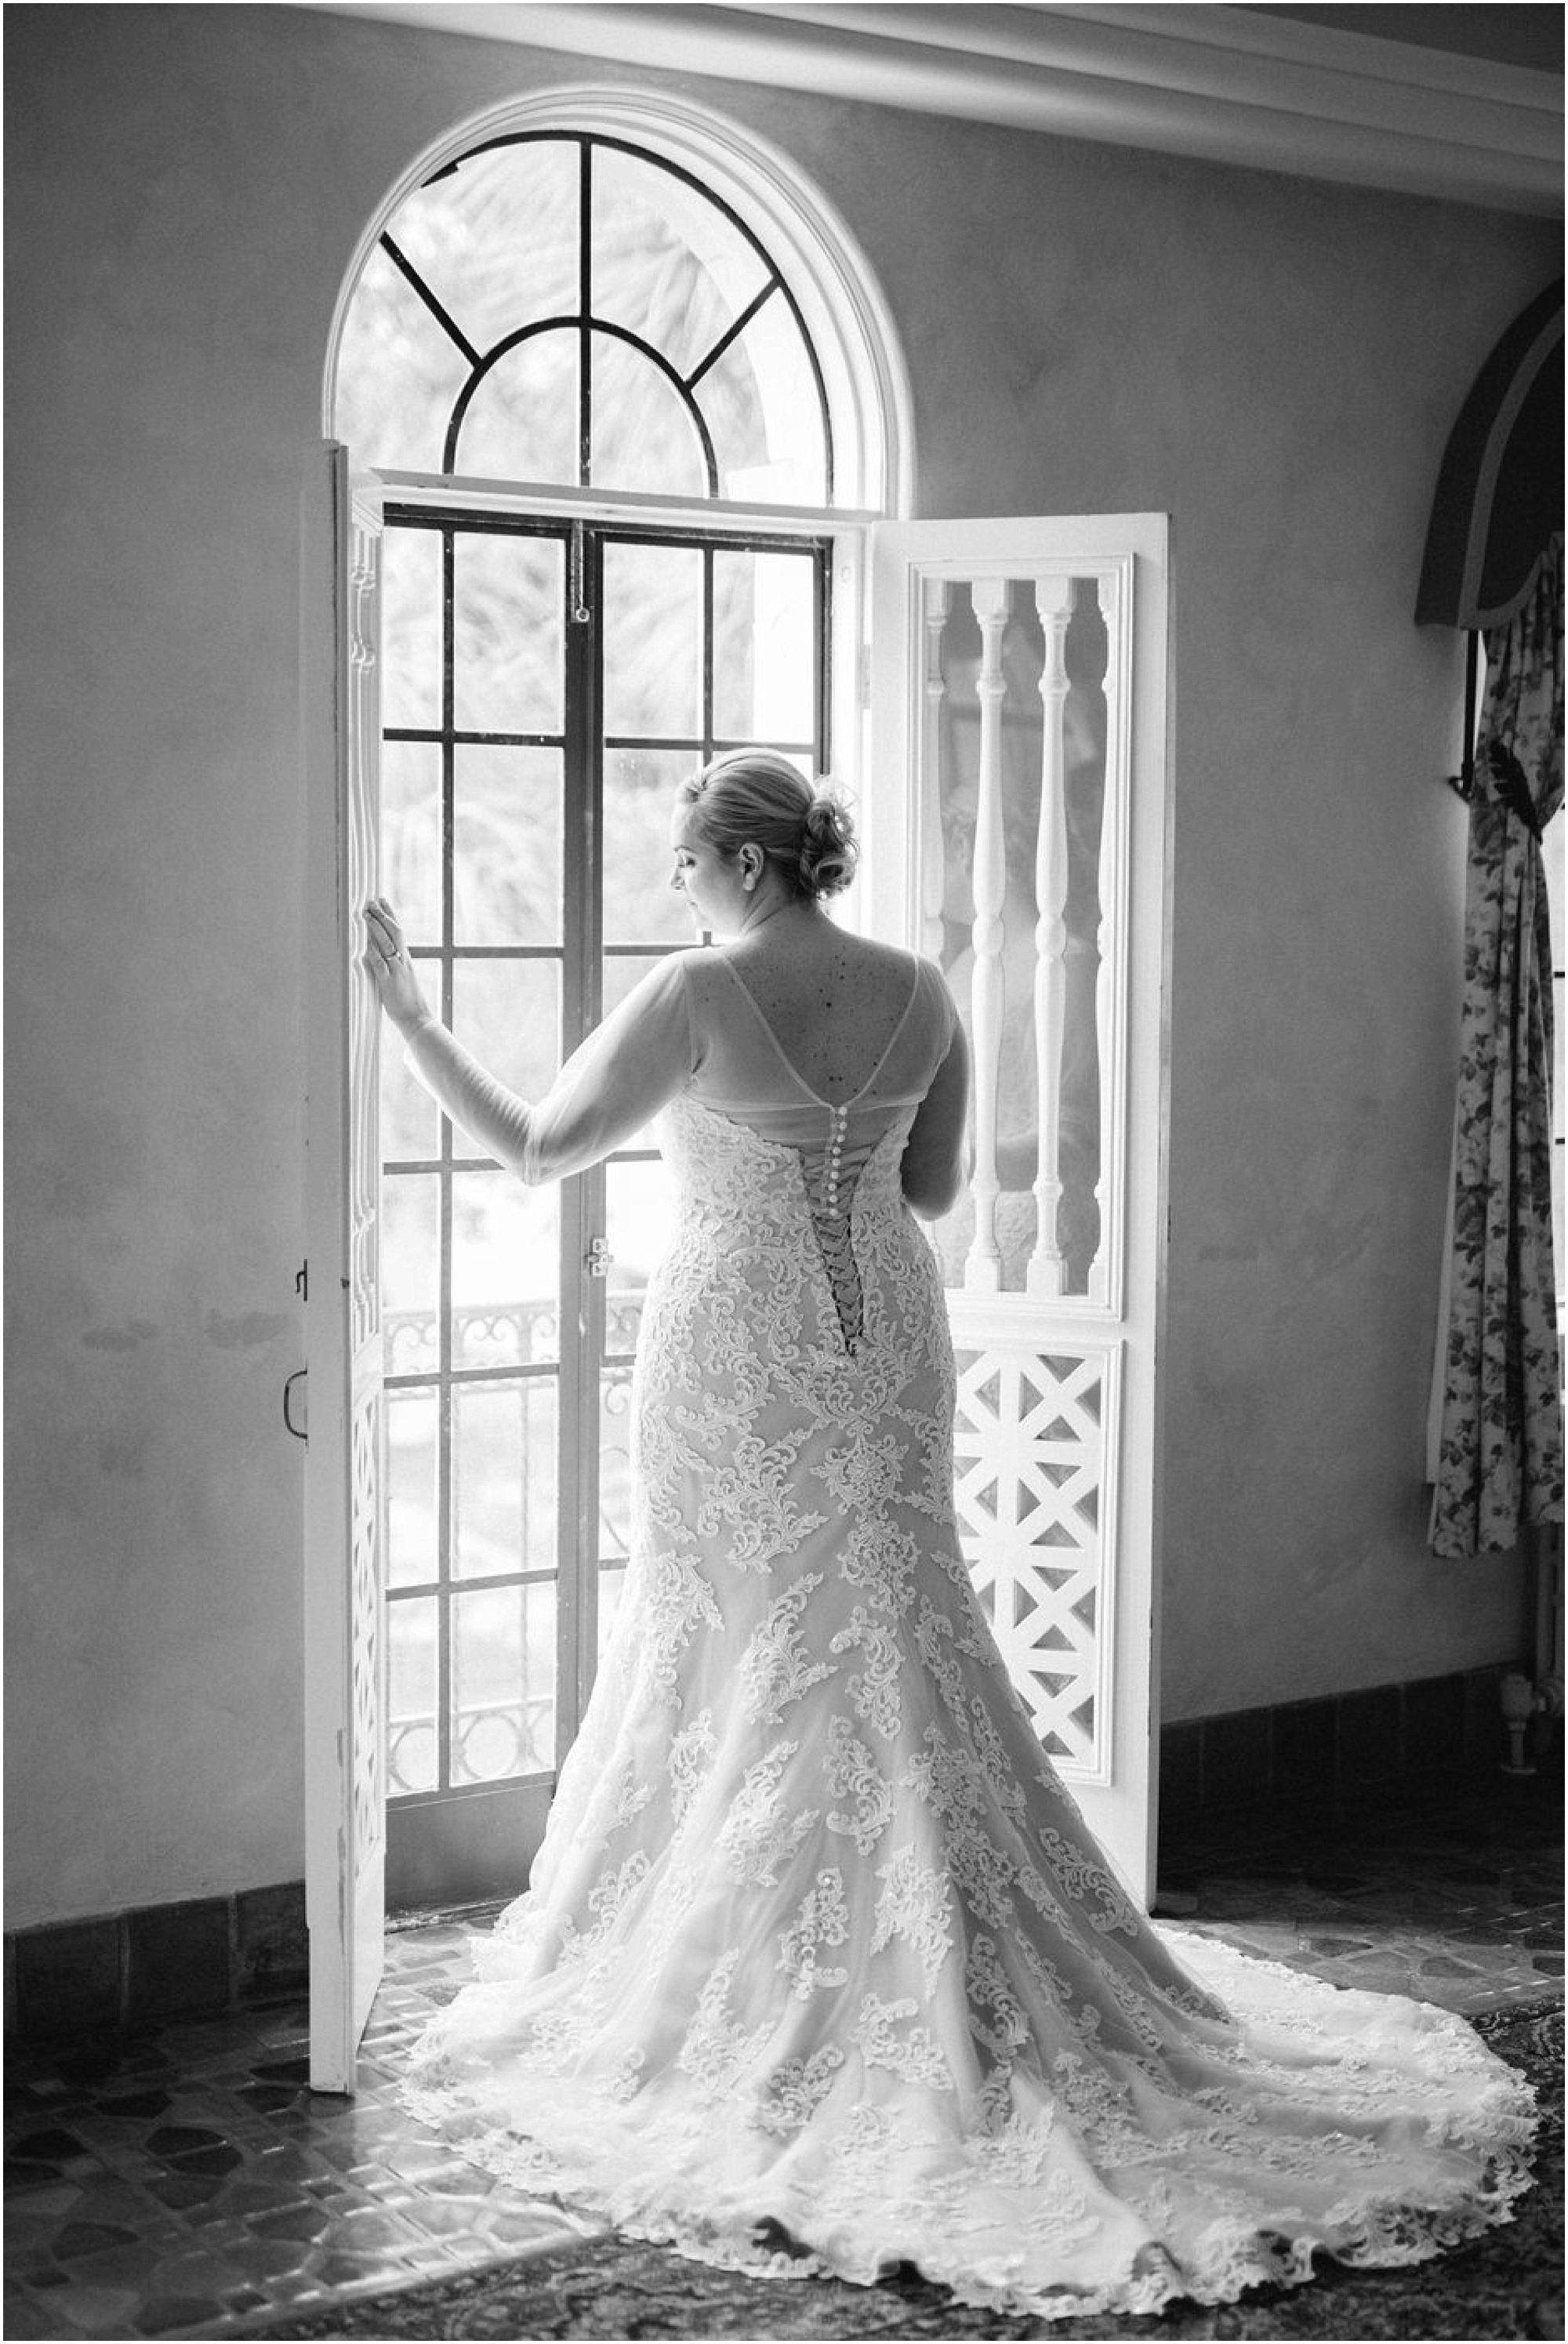 Bride getting ready at The Powel Crosley Estate wedding venue in Sarasota, Florida in Gwendolyn's Room